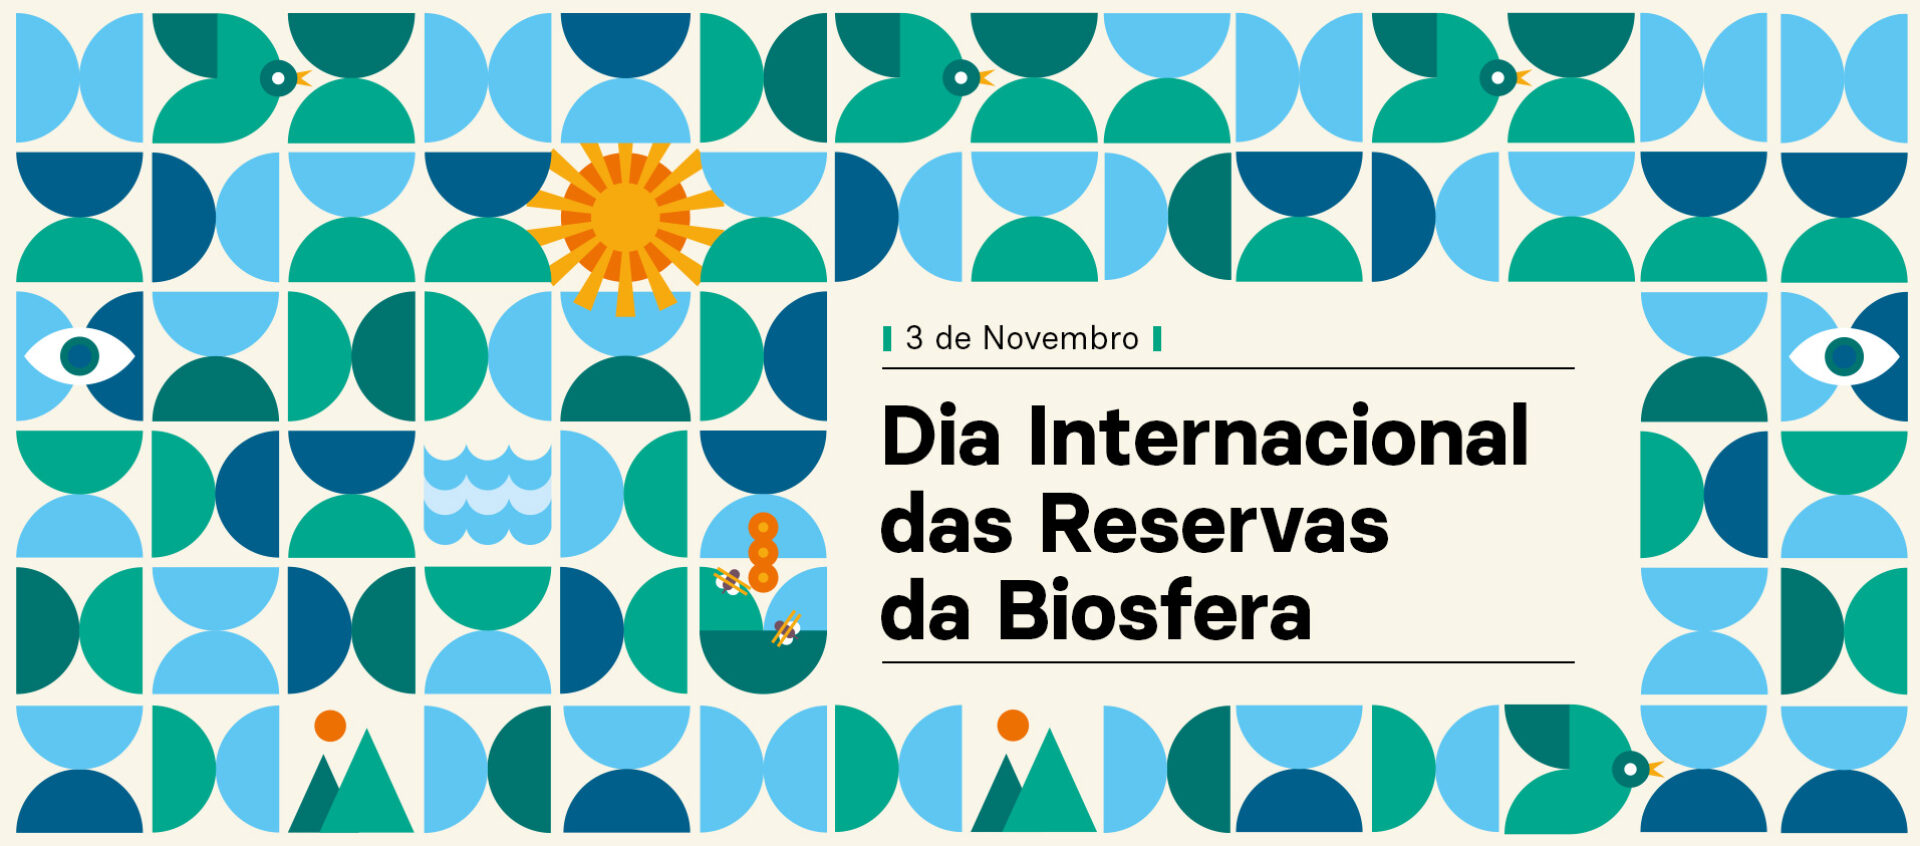 Dia Internacional das Reservas da Biosfera